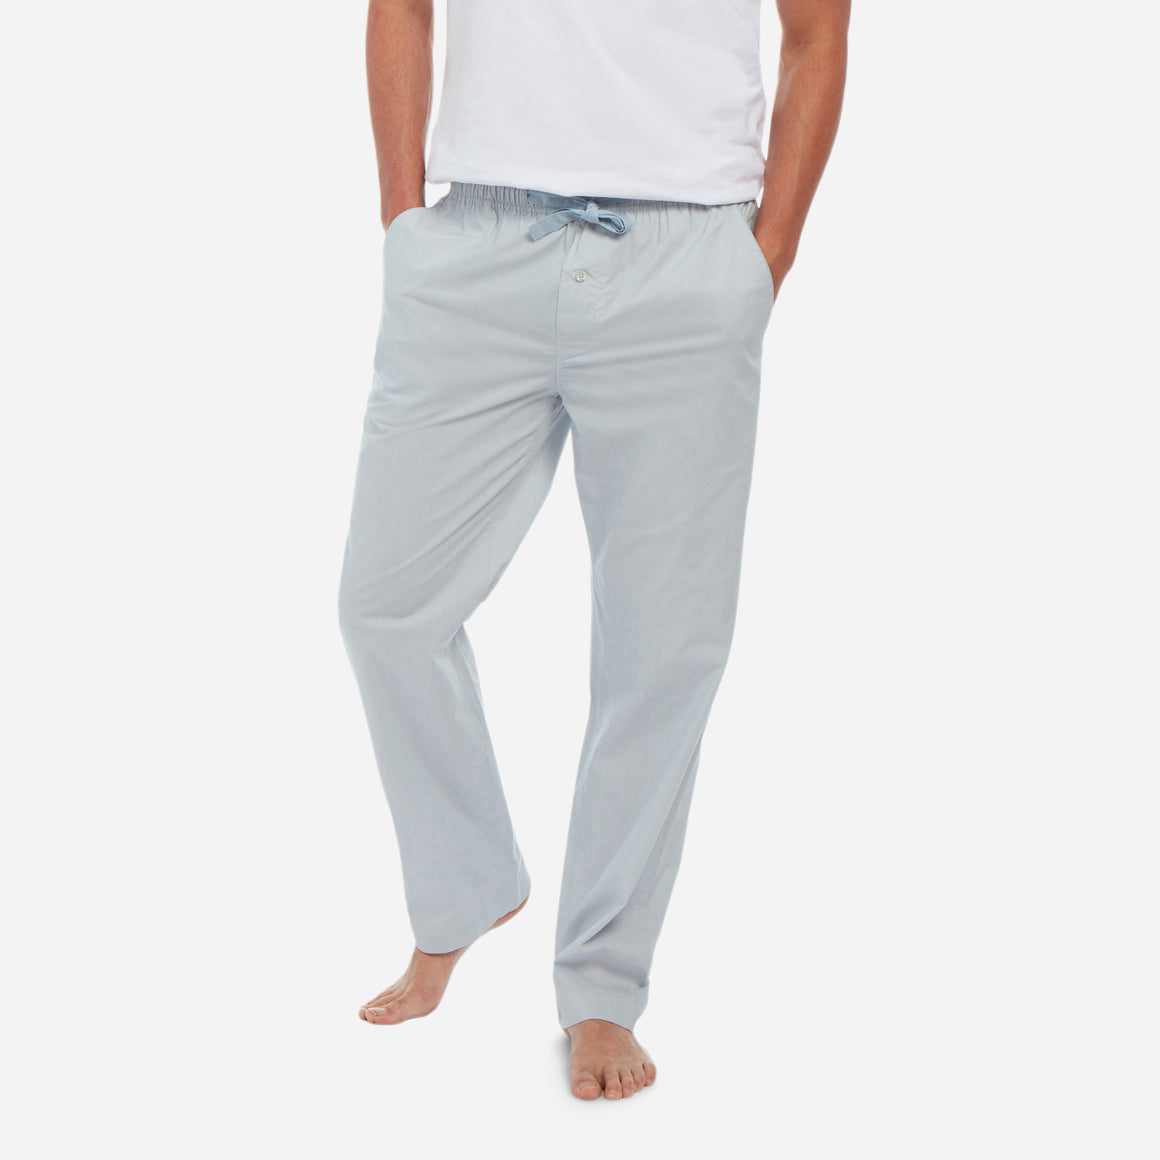 Men's Travel Inspired RVs and Wagons Print Soft Cotton Pajama Pants